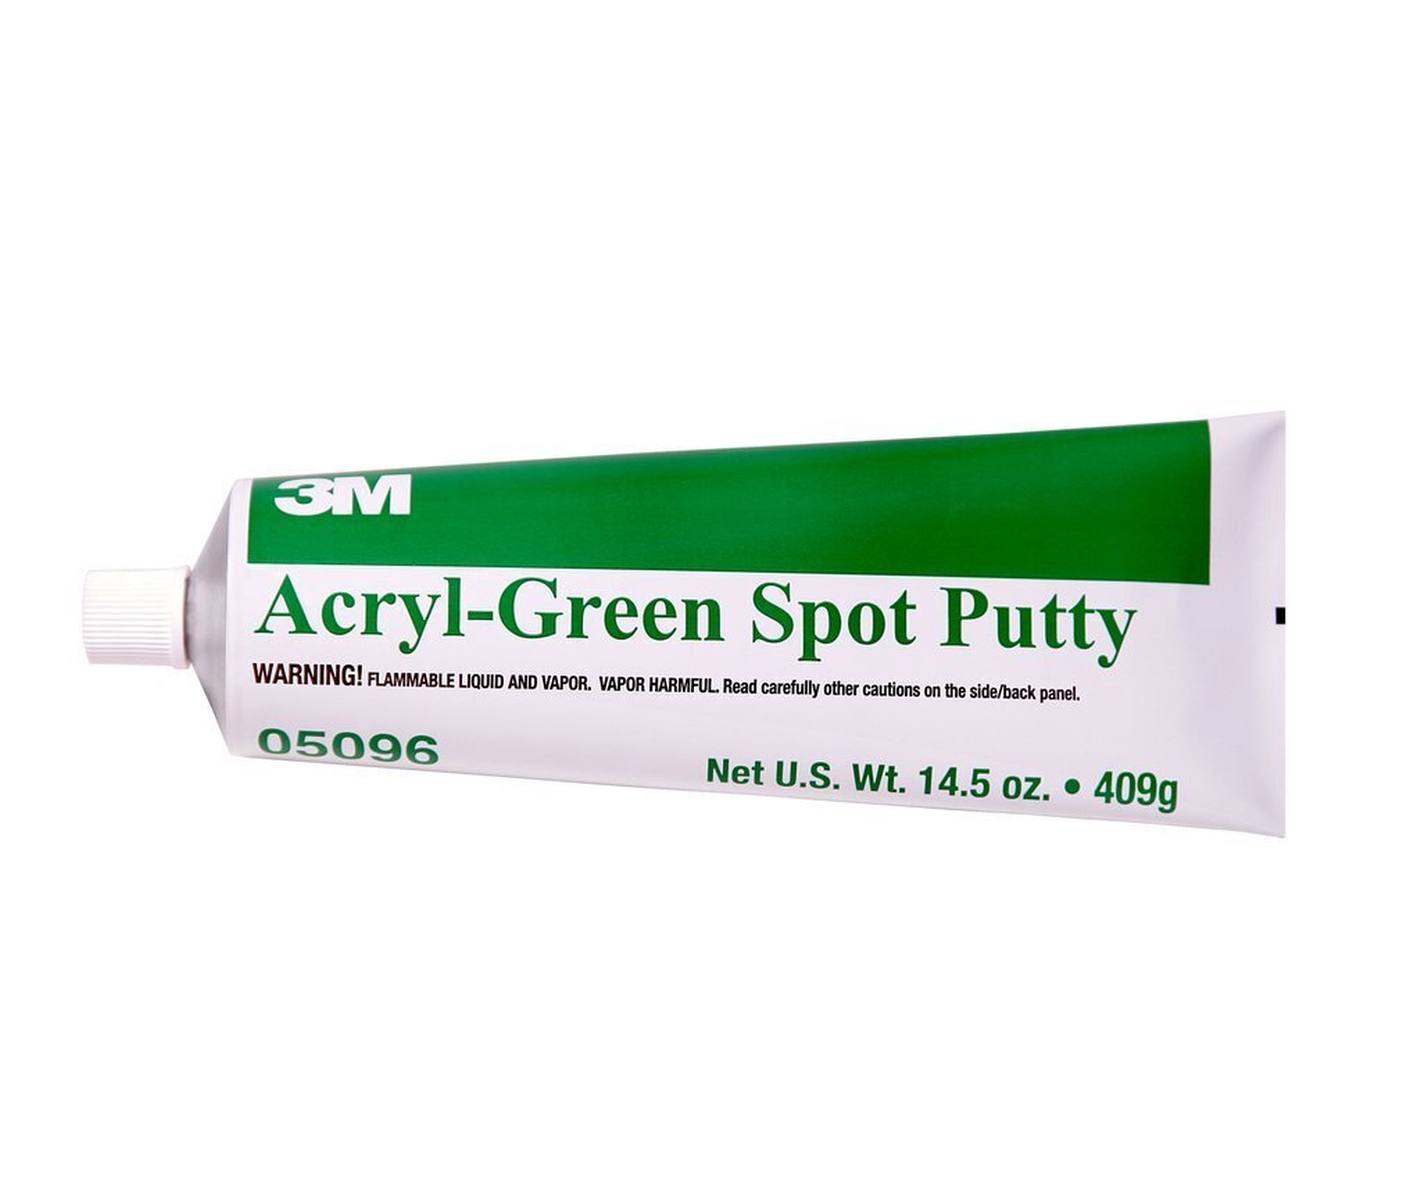 3M Acryl-Green Spot Putty, 409g